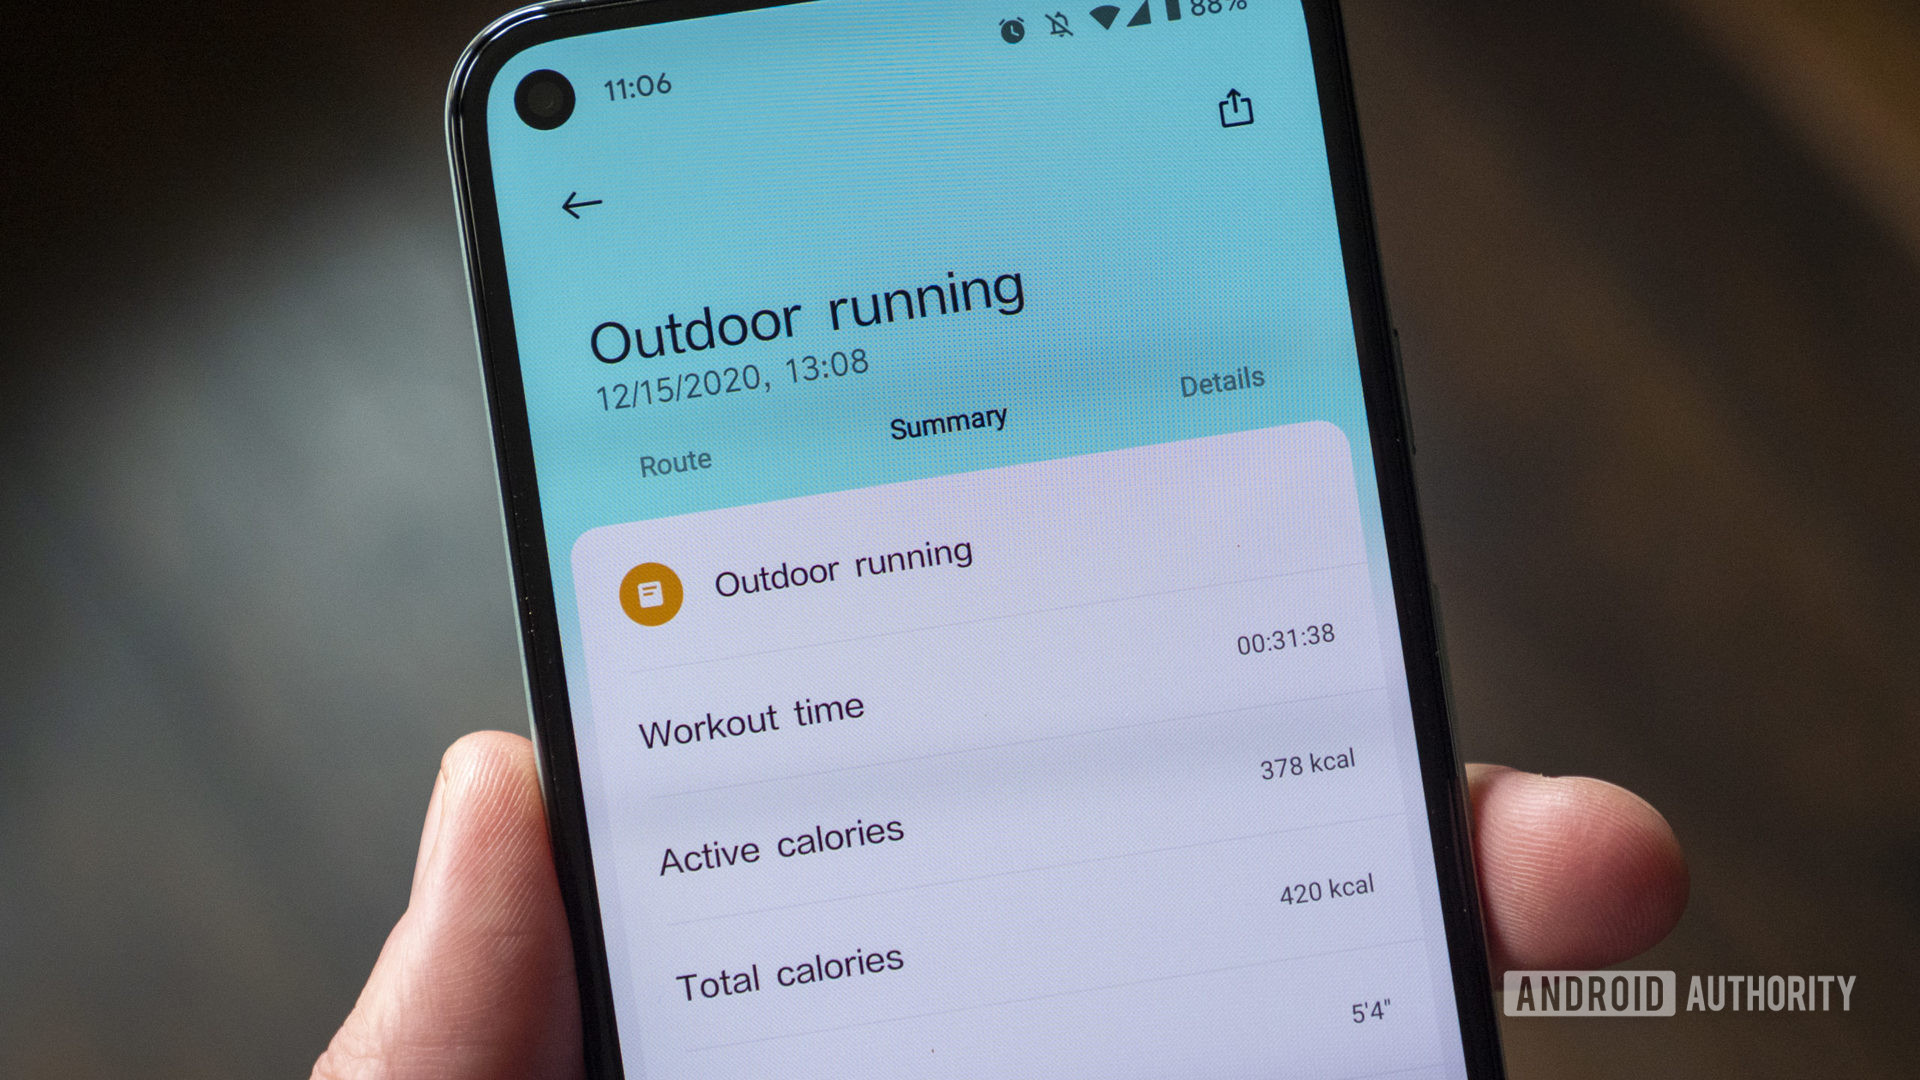 xiaomi mi watch review xiaomi wear app outdoor running data